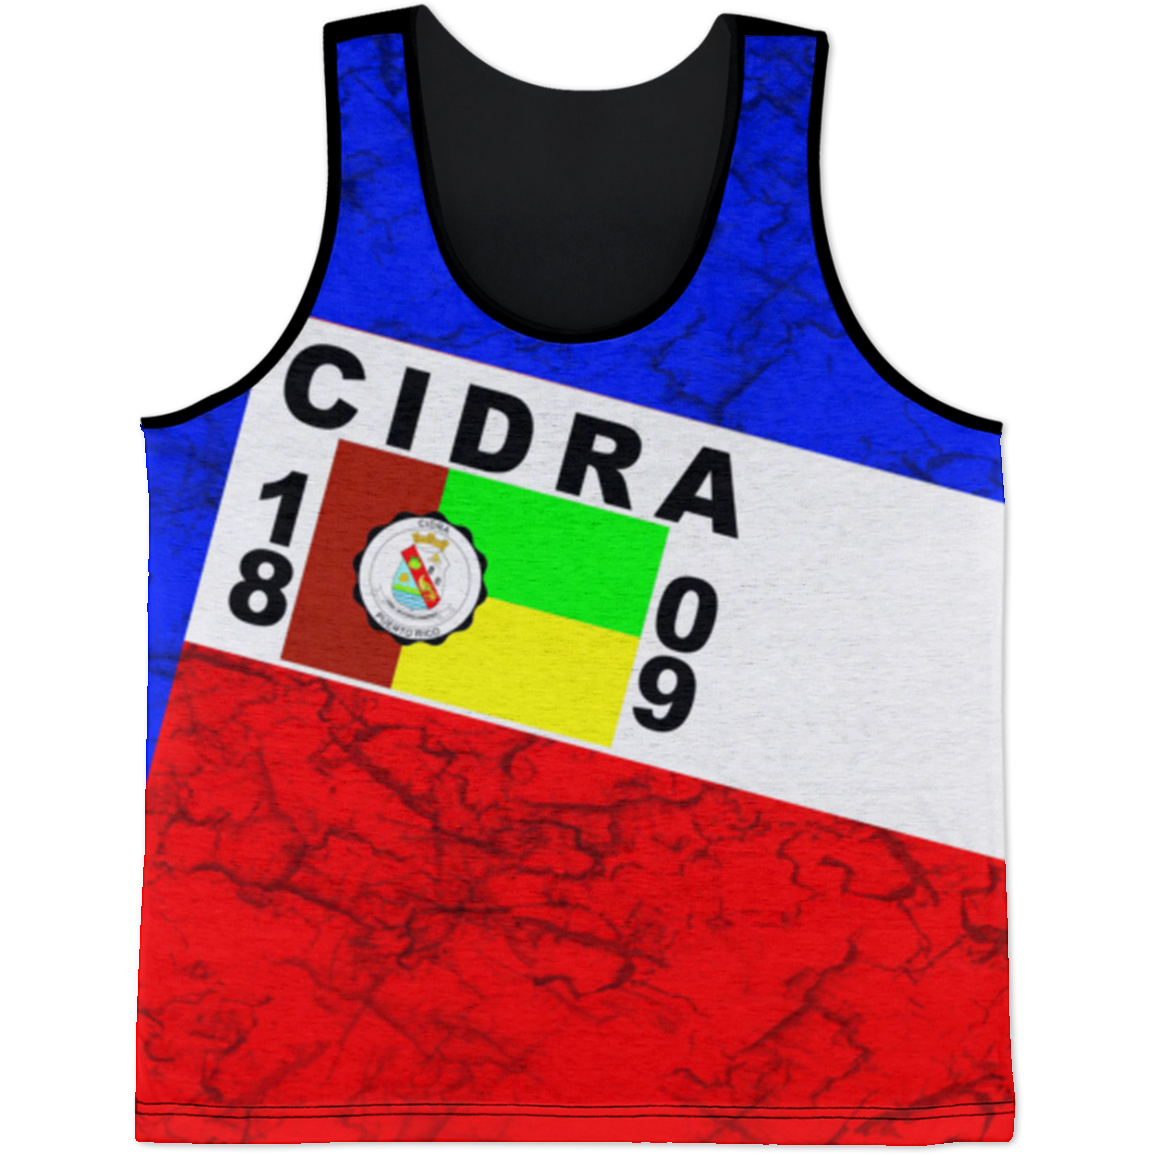 Cidra Tank Top - Puerto Rican Pride